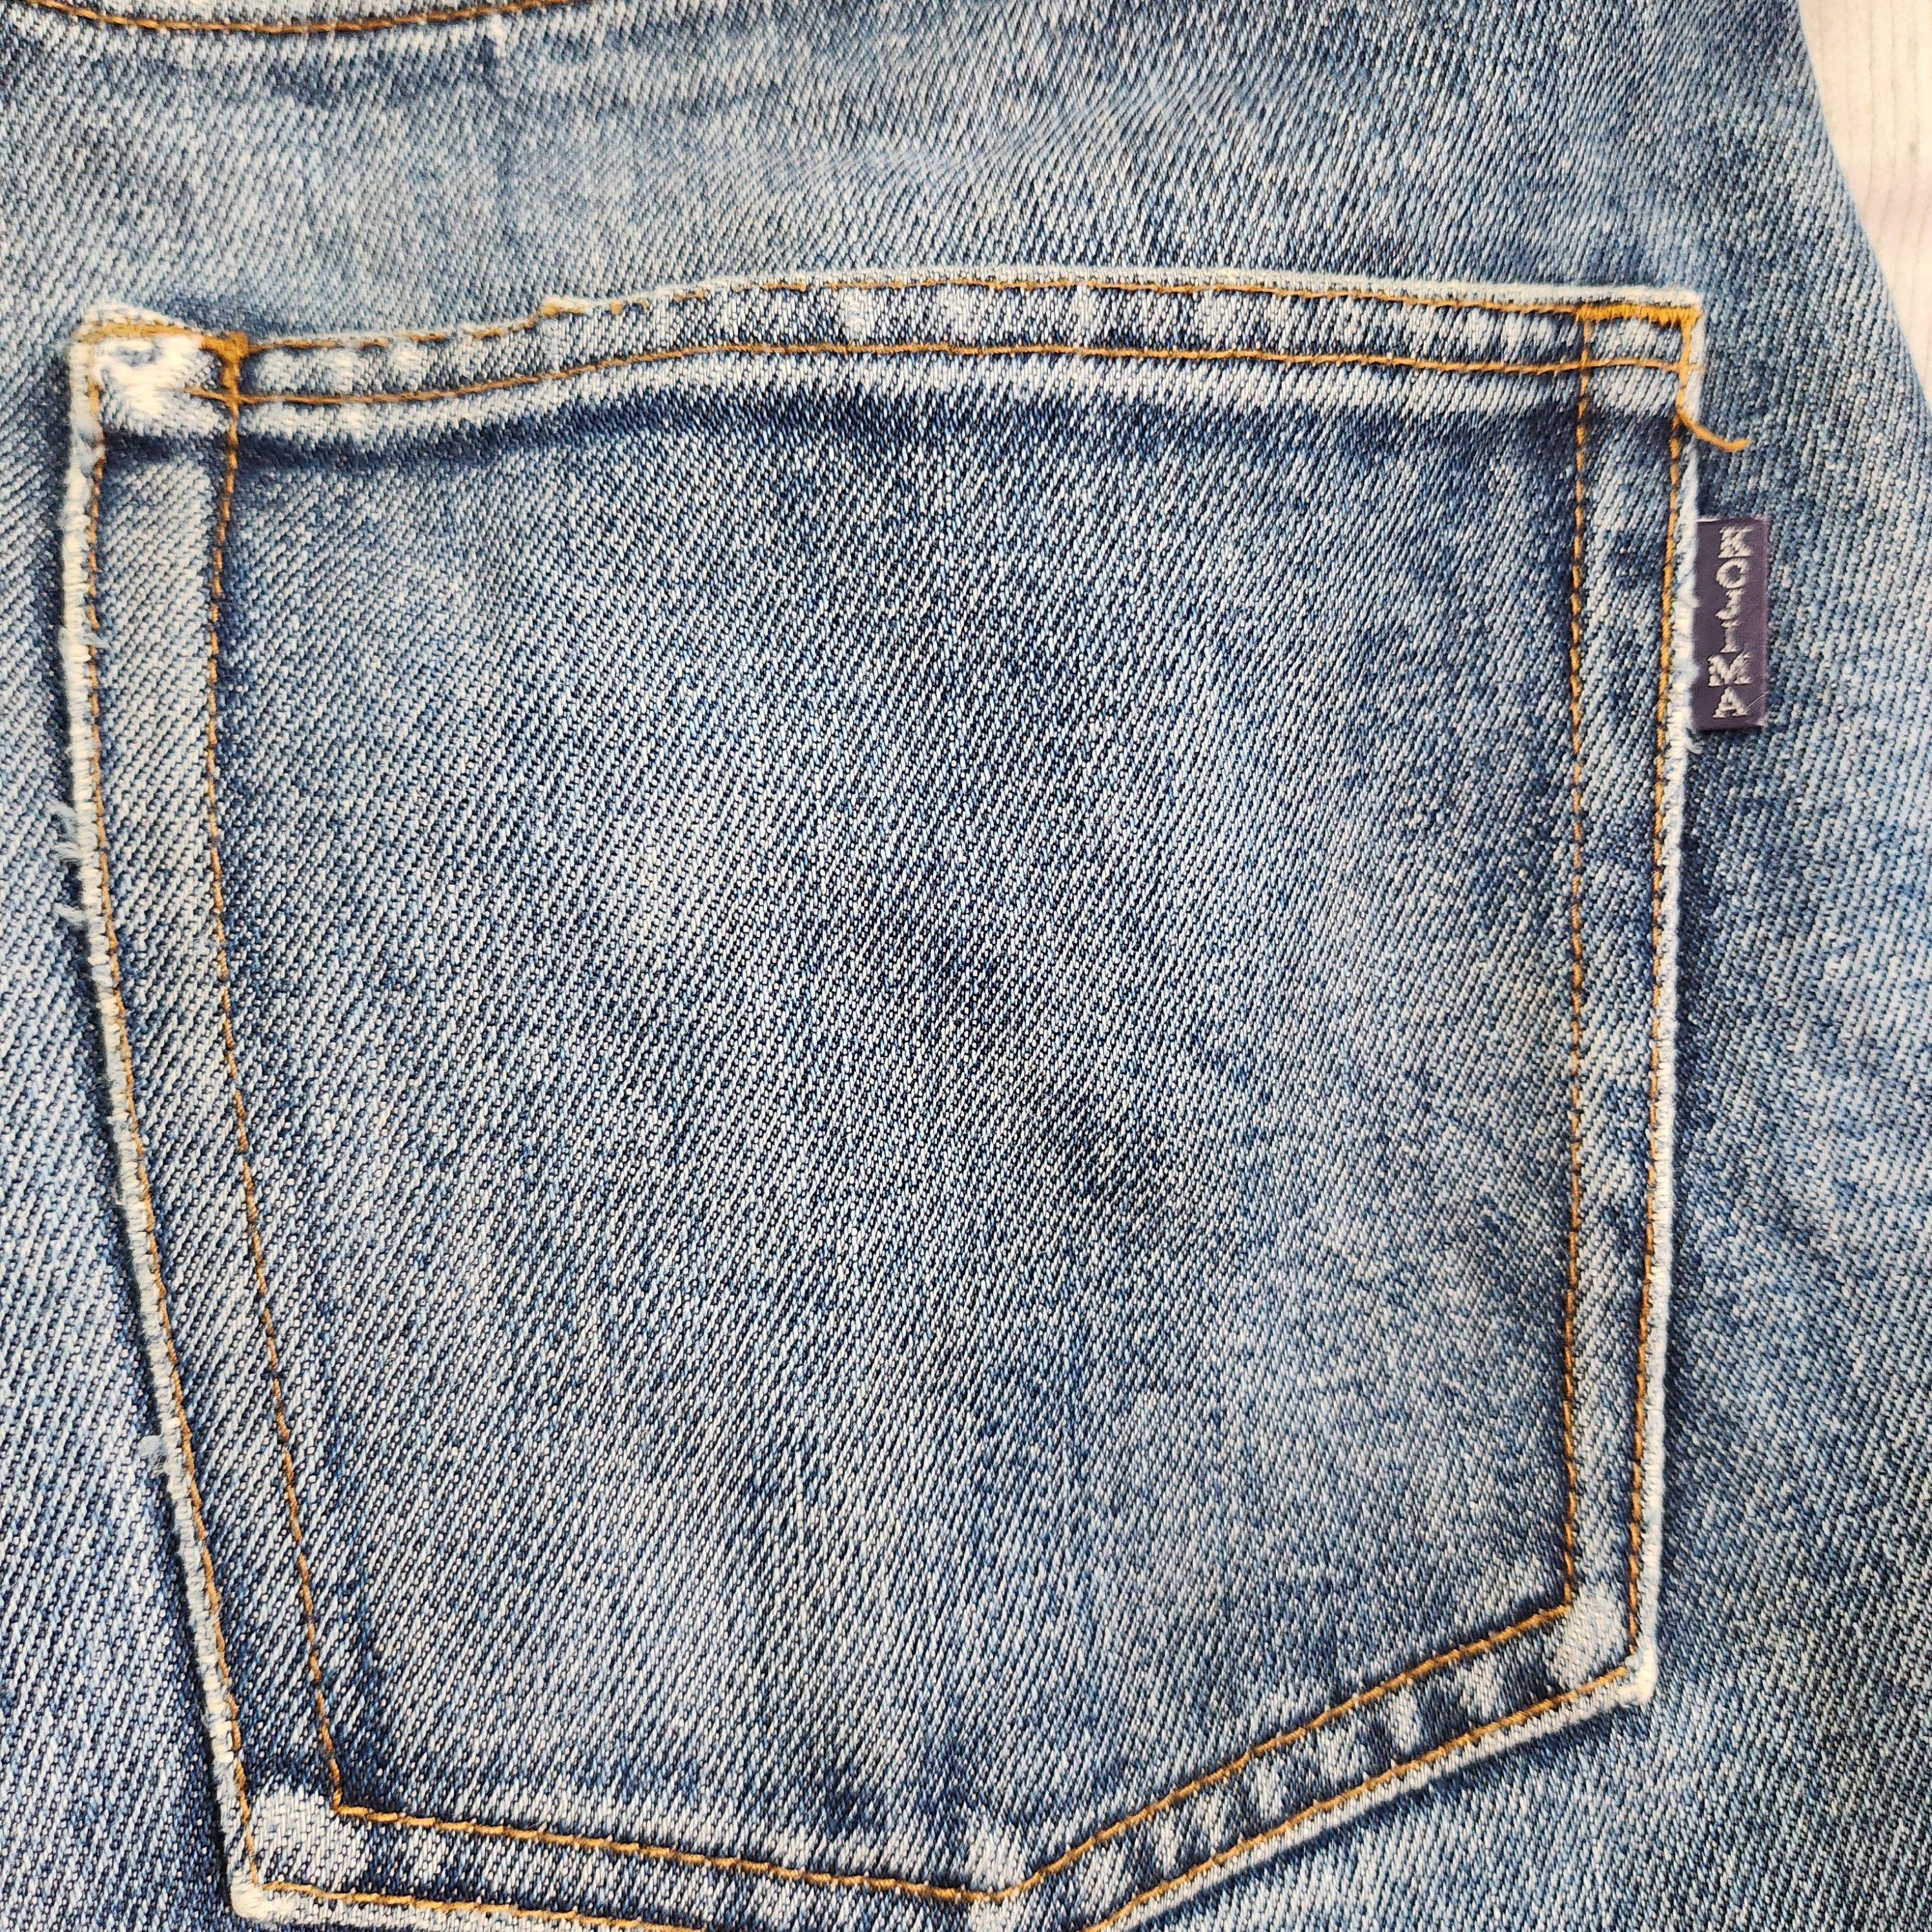 Japan Blue - Kojima Genes Japan Vintage Denim Blue Jeans Ripped - 10